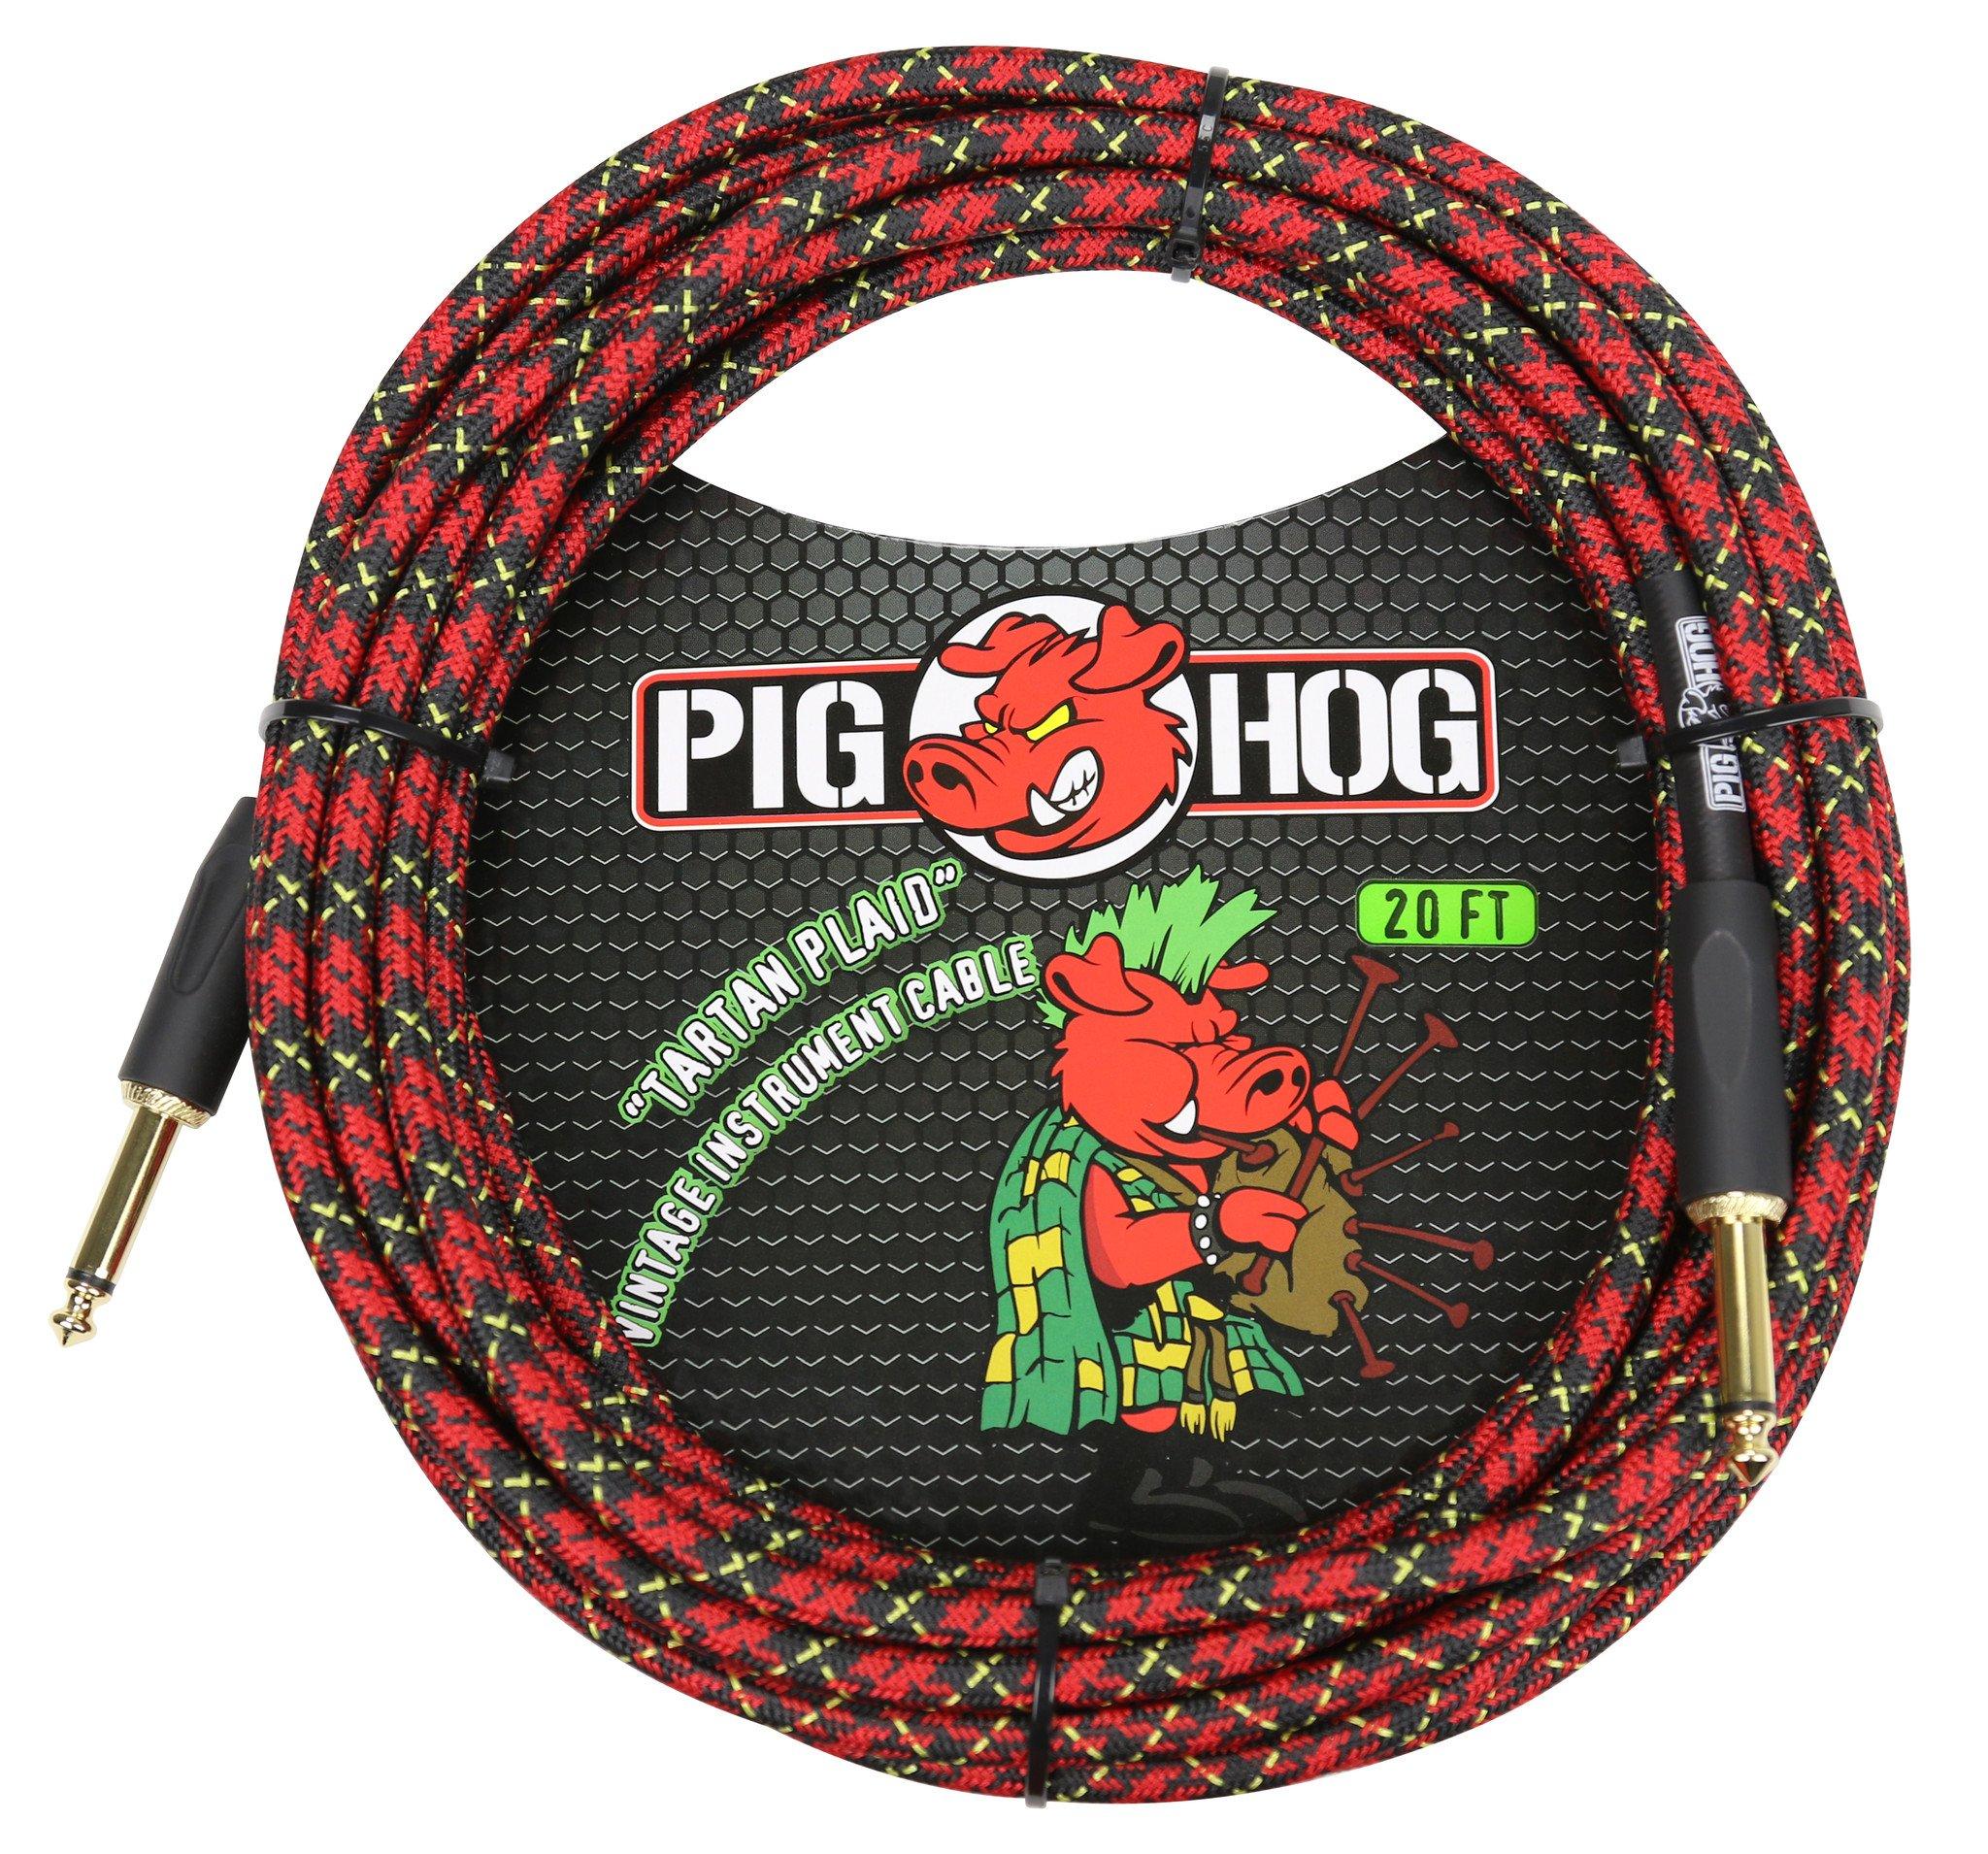 Pig Hog "Tartan Plaid" Instrument Cable, 20ft